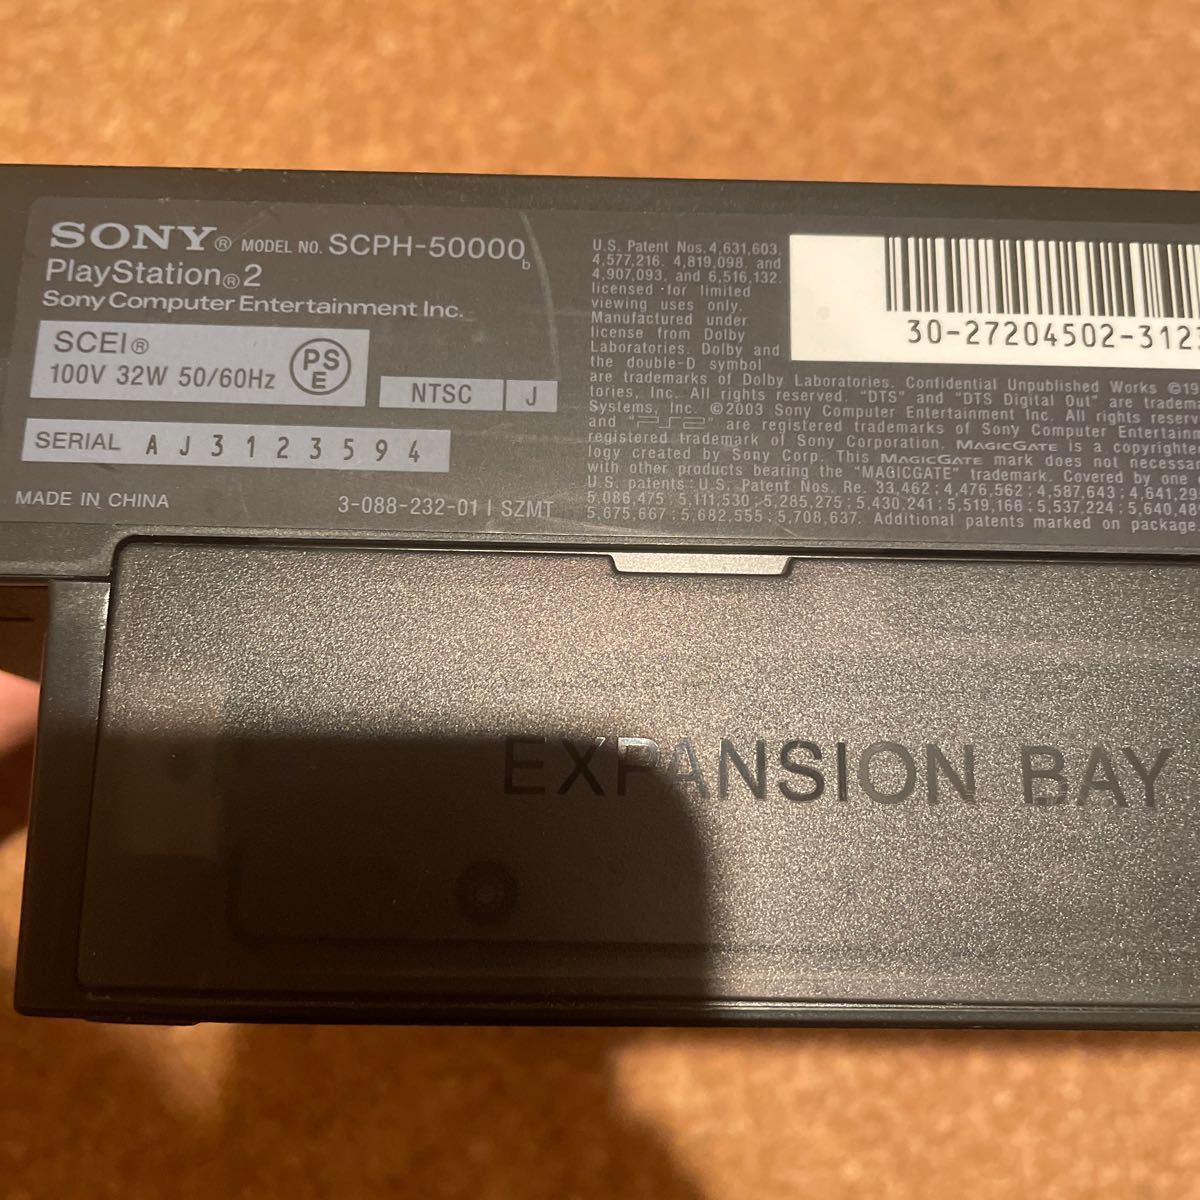 SONY PlayStation2 ジャンク品セット